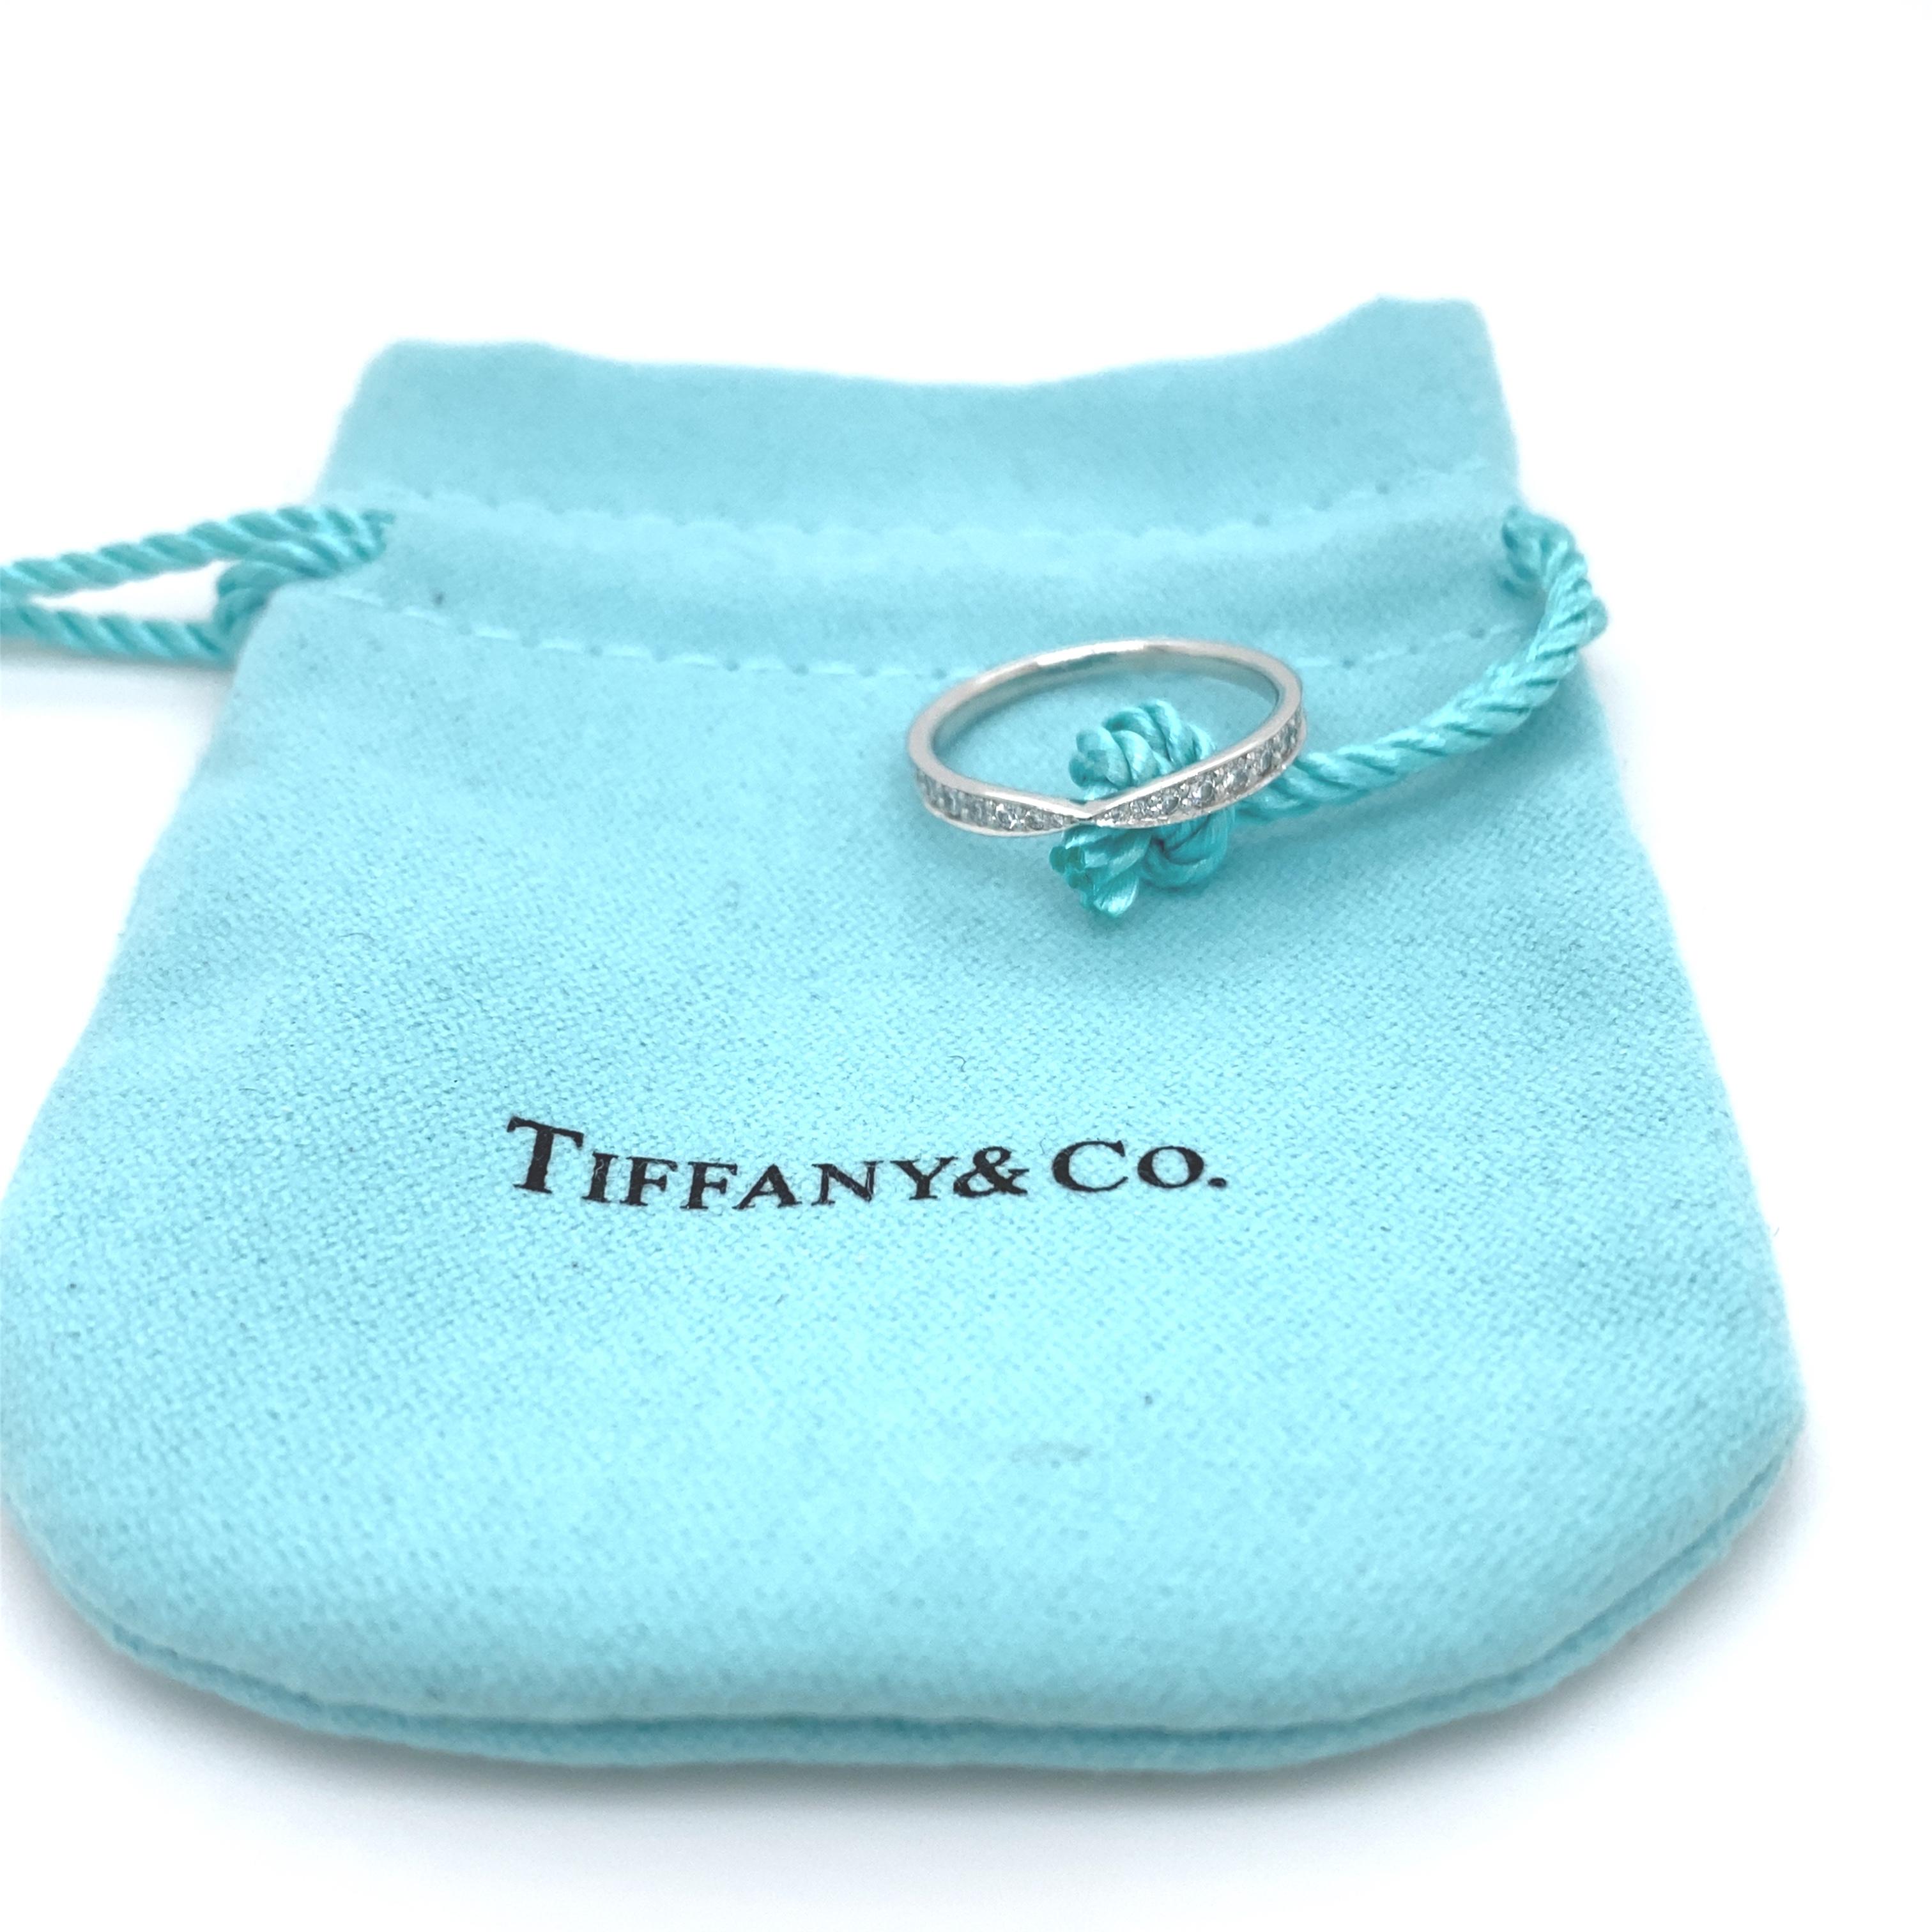 Tiffany & Co Harmony Bead - Set Diamond Band Ring
Style:  Bead-Set
Metal:  PT950 Platinum
Size:  6 - sizable
TCW:  0.23 tcw
Main Diamond:  20 Round Brilliant Diamonds
Color & Clarity:  F - G, VVS - VS
Hallmark:  ©TIFFANY&CO PT950
Includes:  T&CO